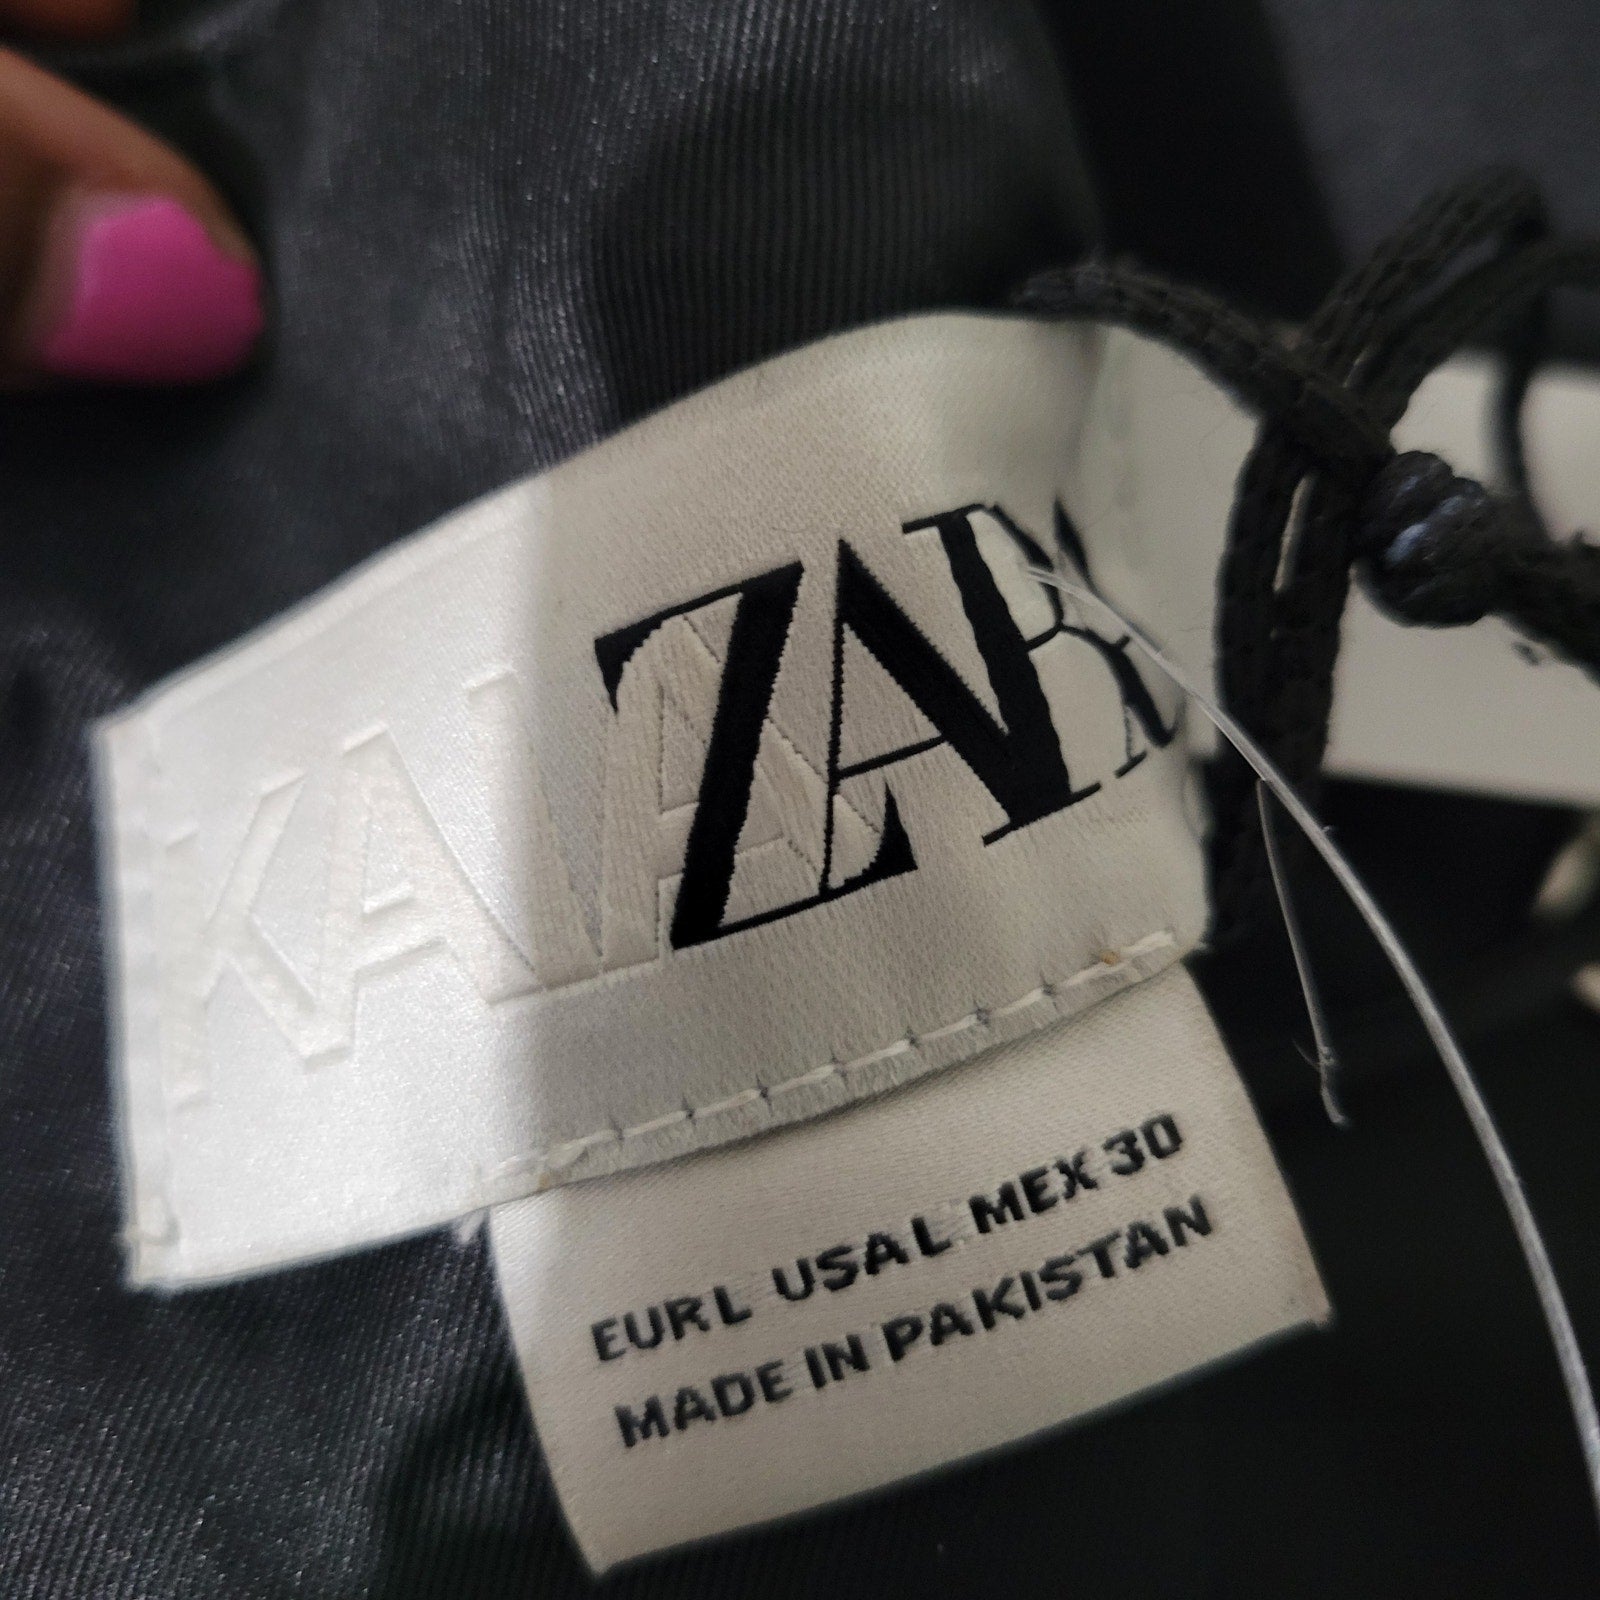 Zara Leather Crop Top Black Strappy Bustier One Shoulder Halter Tube Boxy Kaia Gerber Size Large